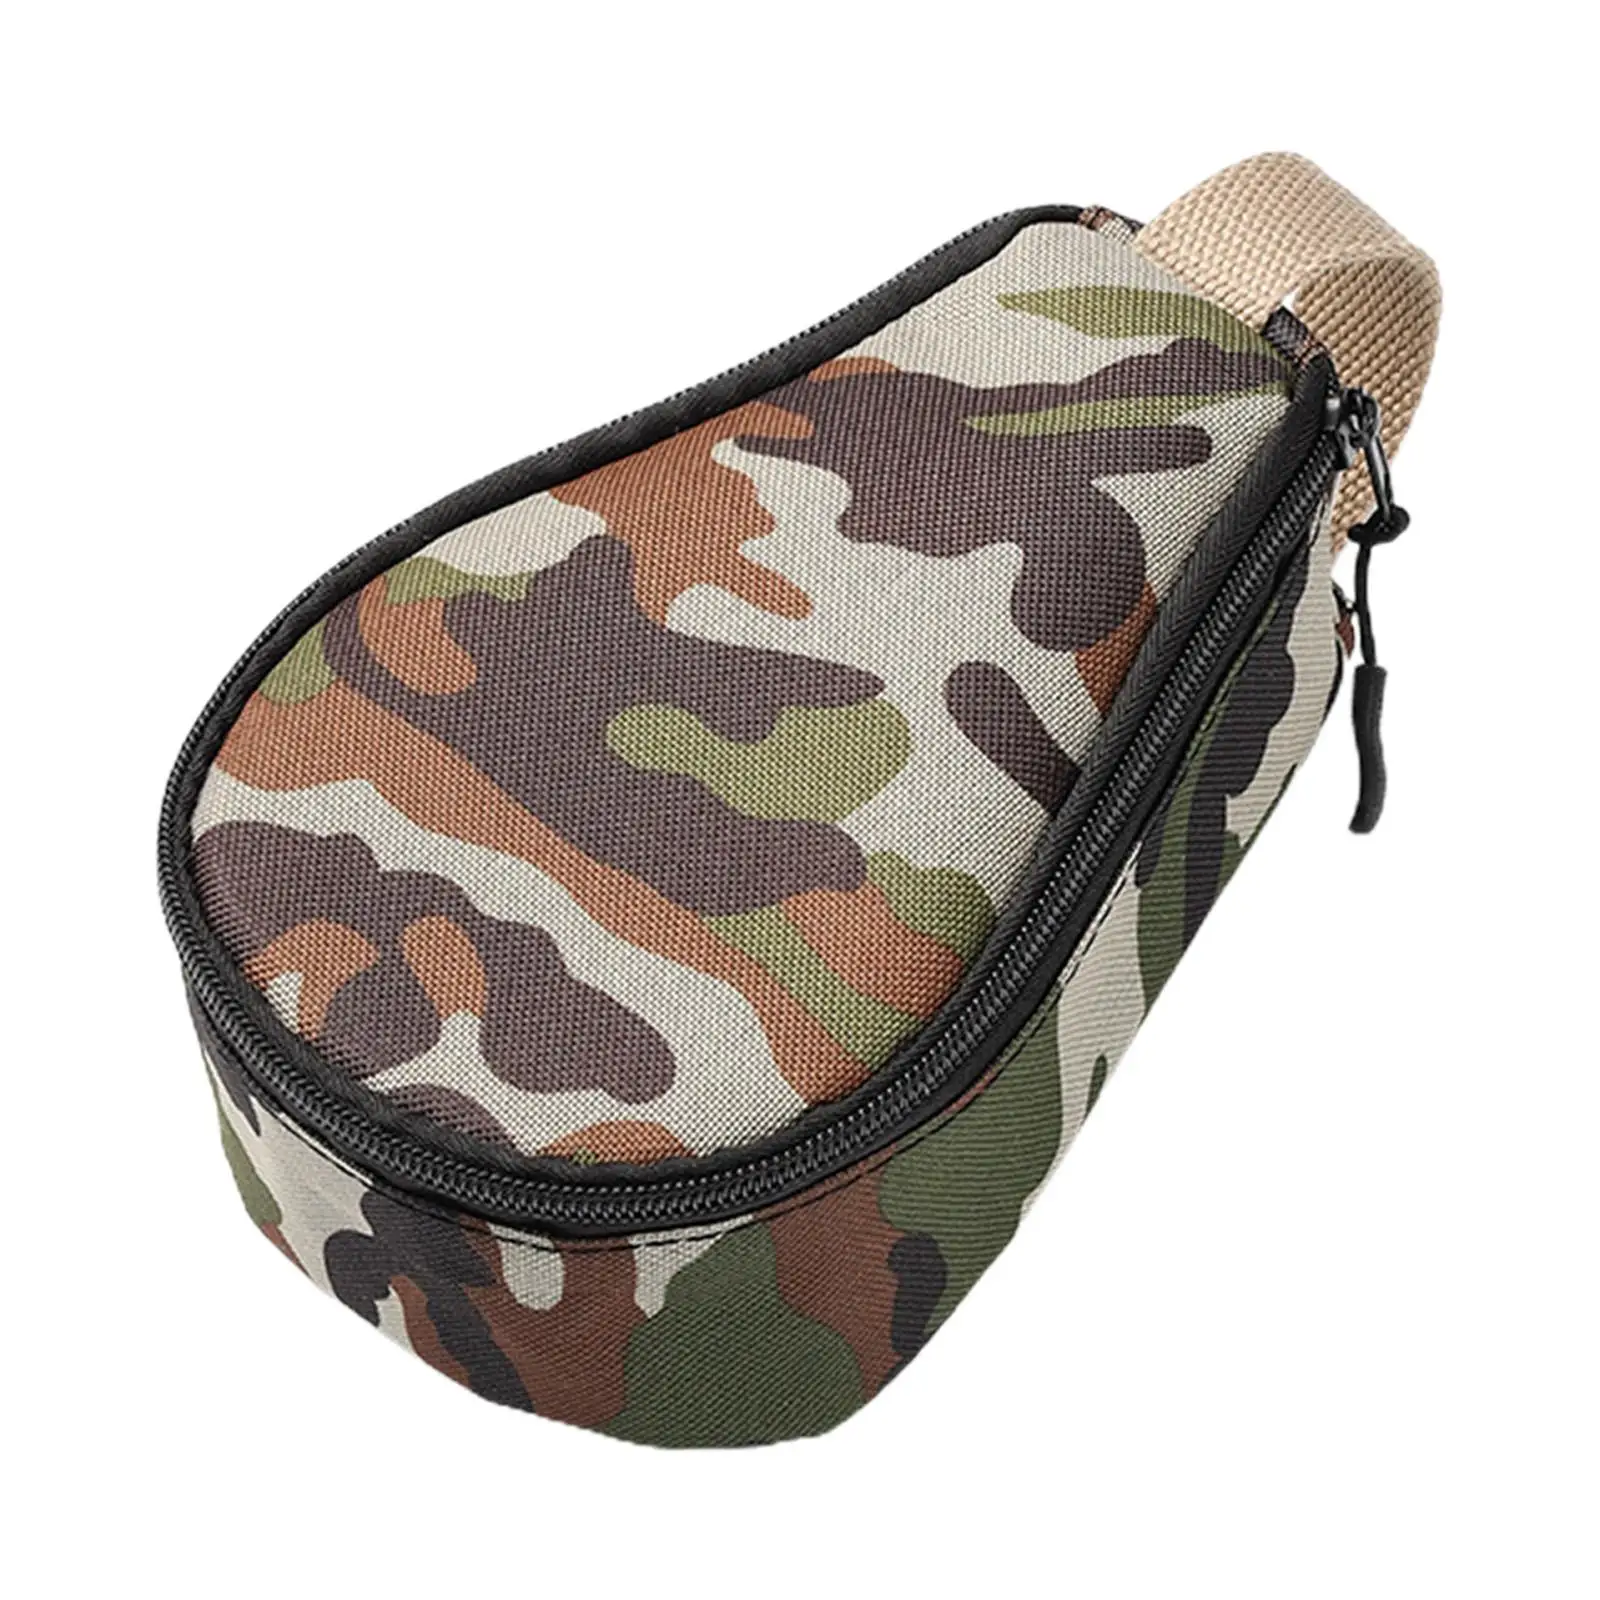 Portable Bowl Bag Flatware Organizer Durable Oxford Cloth Reusable Tableware Storage Park Hiking Trips Picnic BBQ